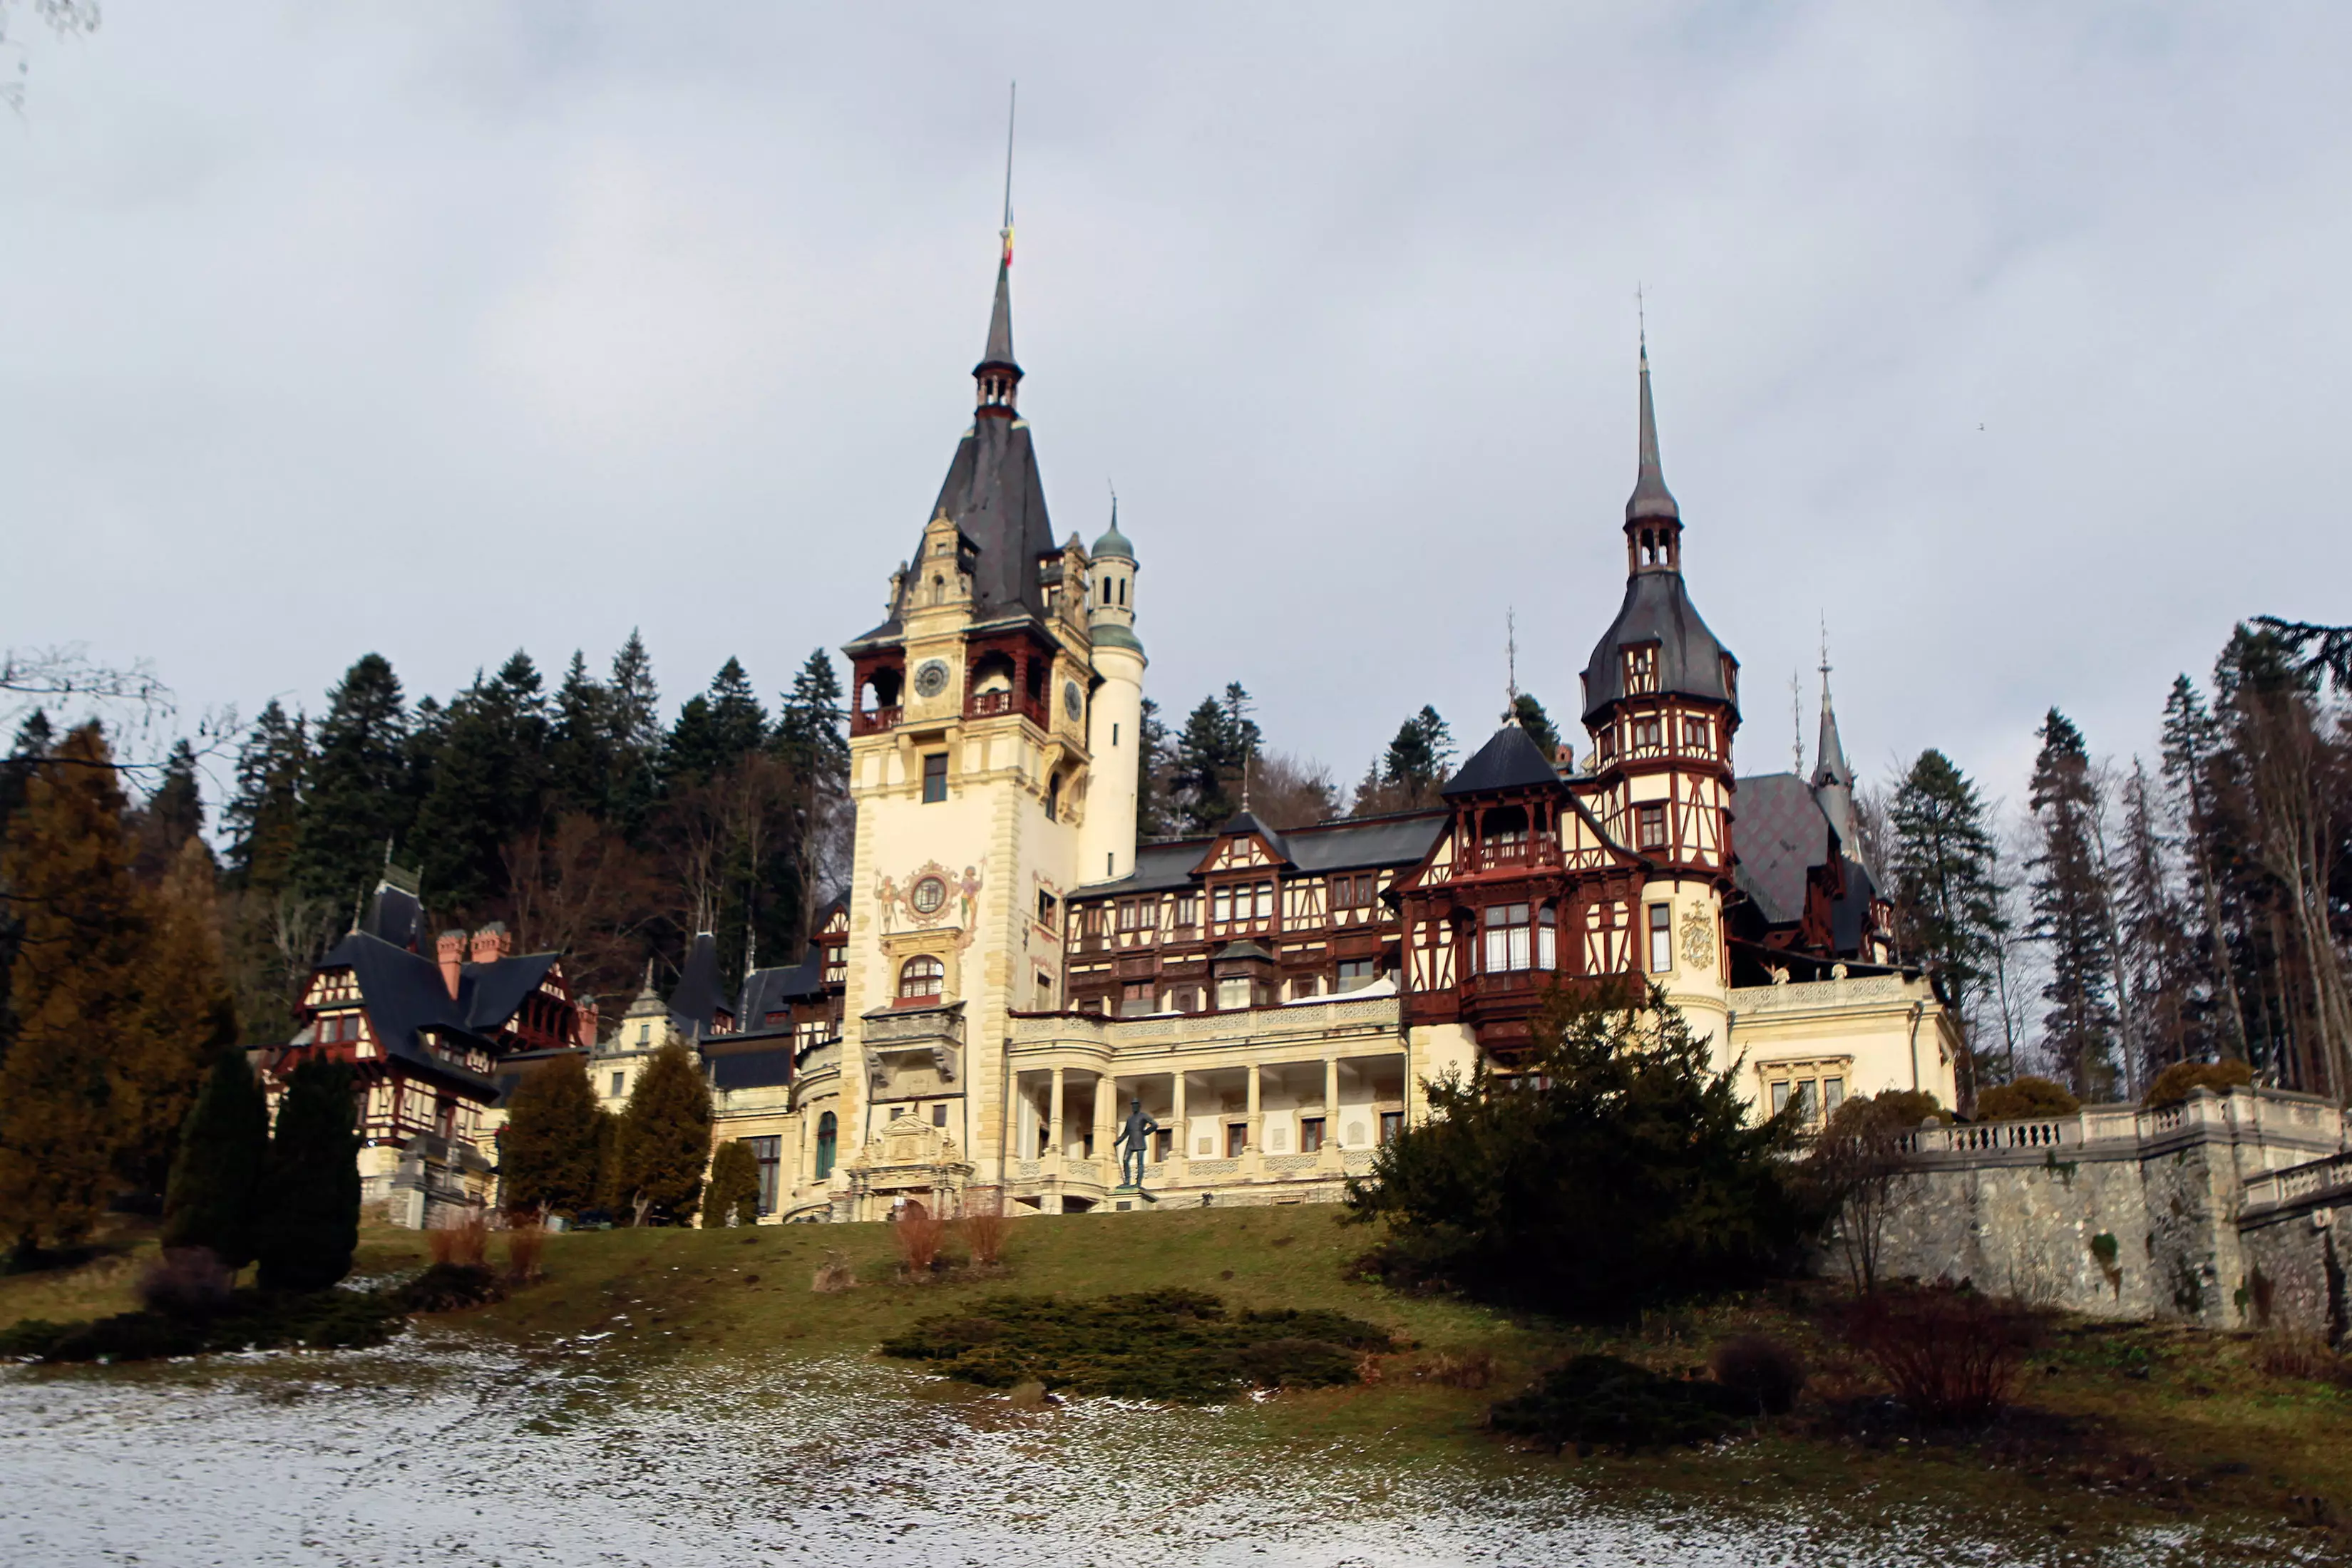 Peles Castle in Romania is open to visitors (